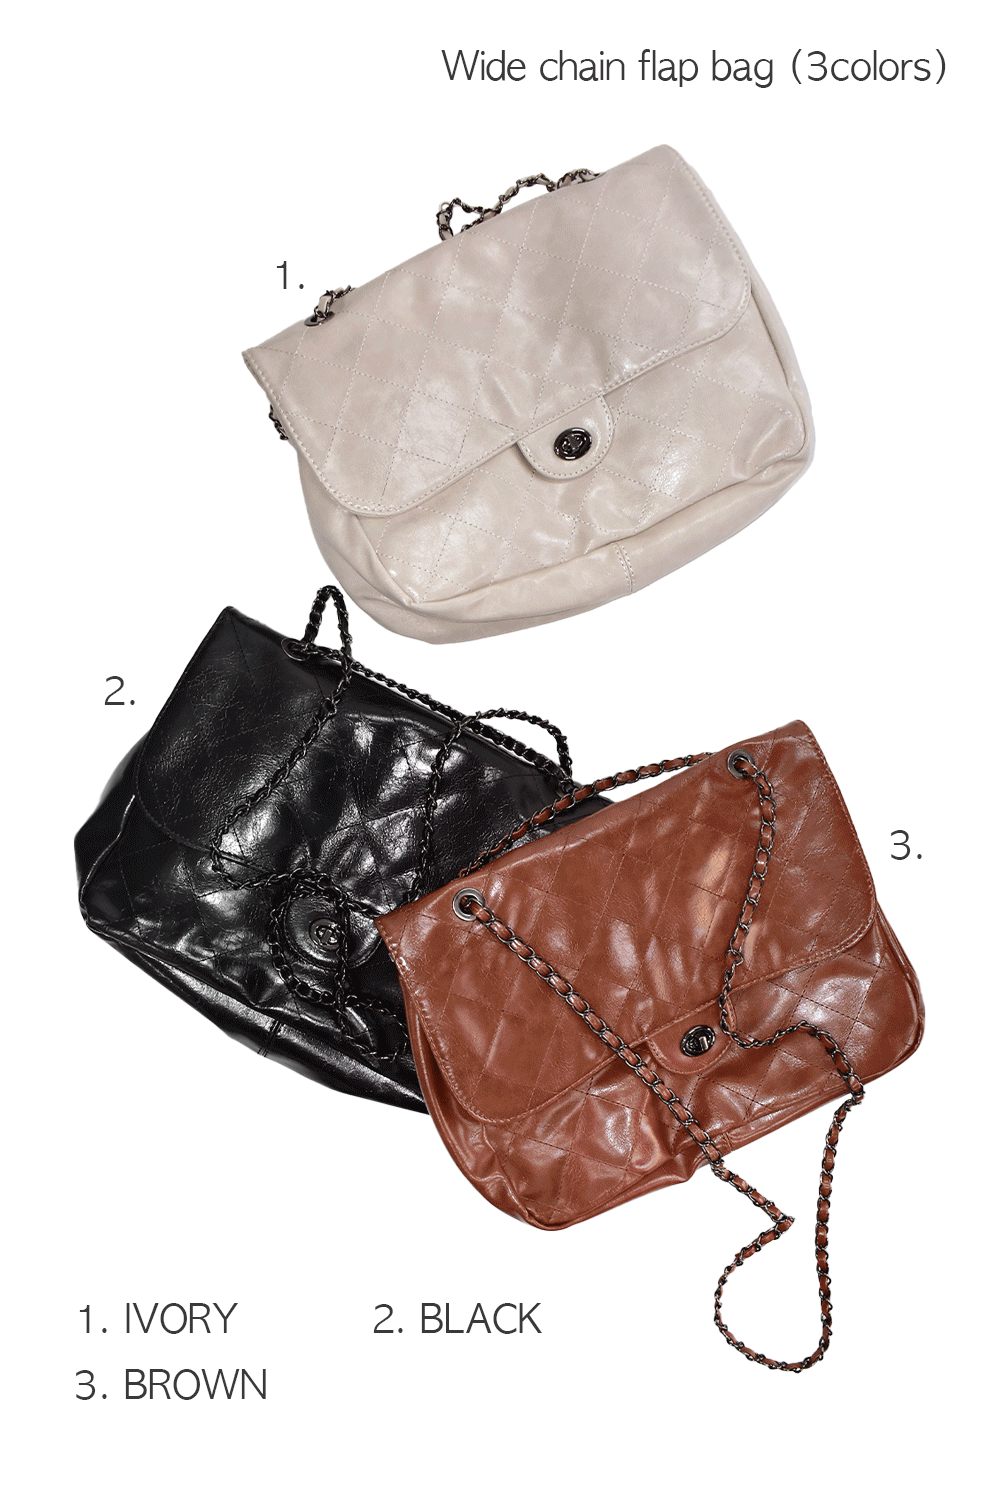 wide chain flap bag (3colors)